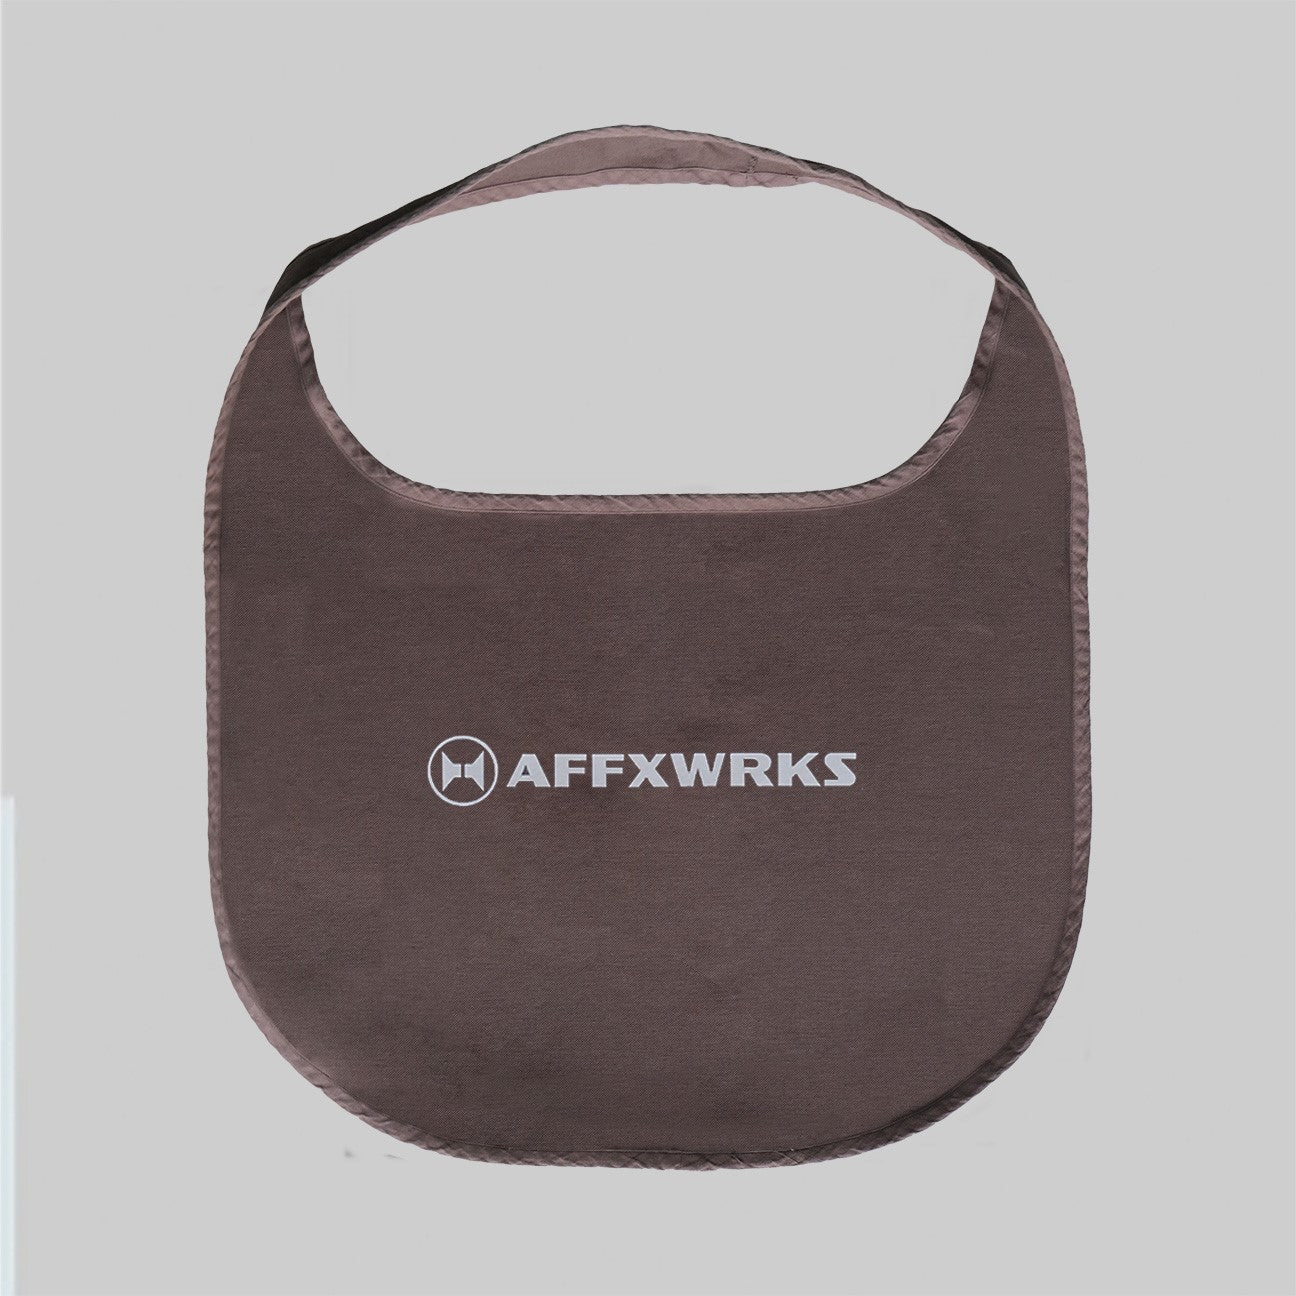 CIRCULAR BAG – AFFXWRKS